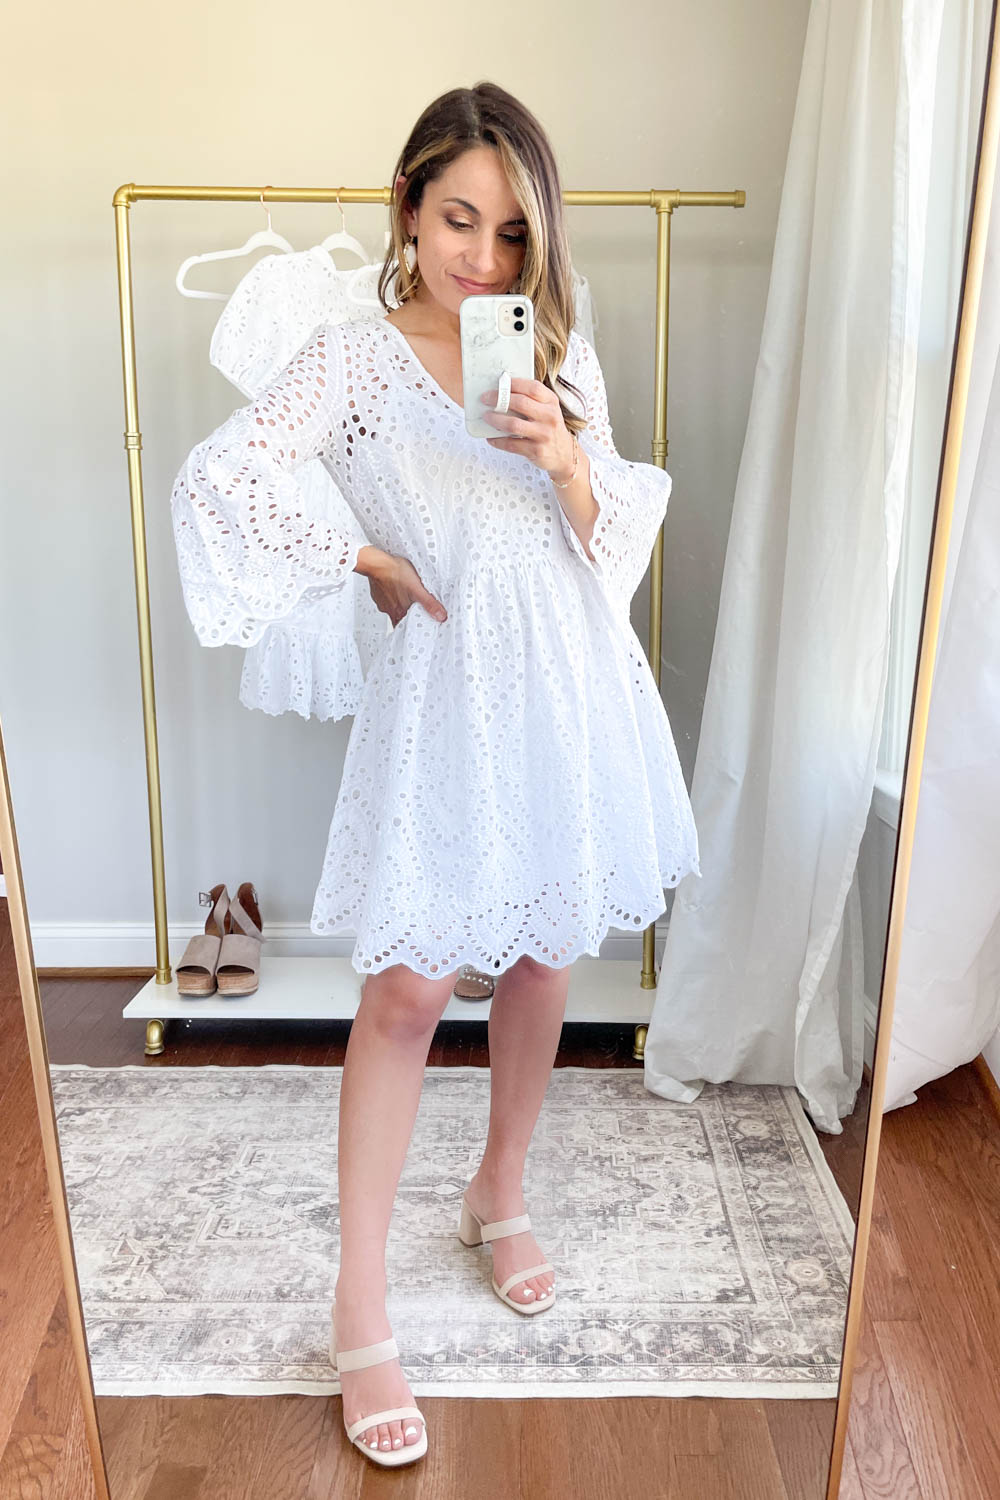 Petite White Dress Edit - Petite Style